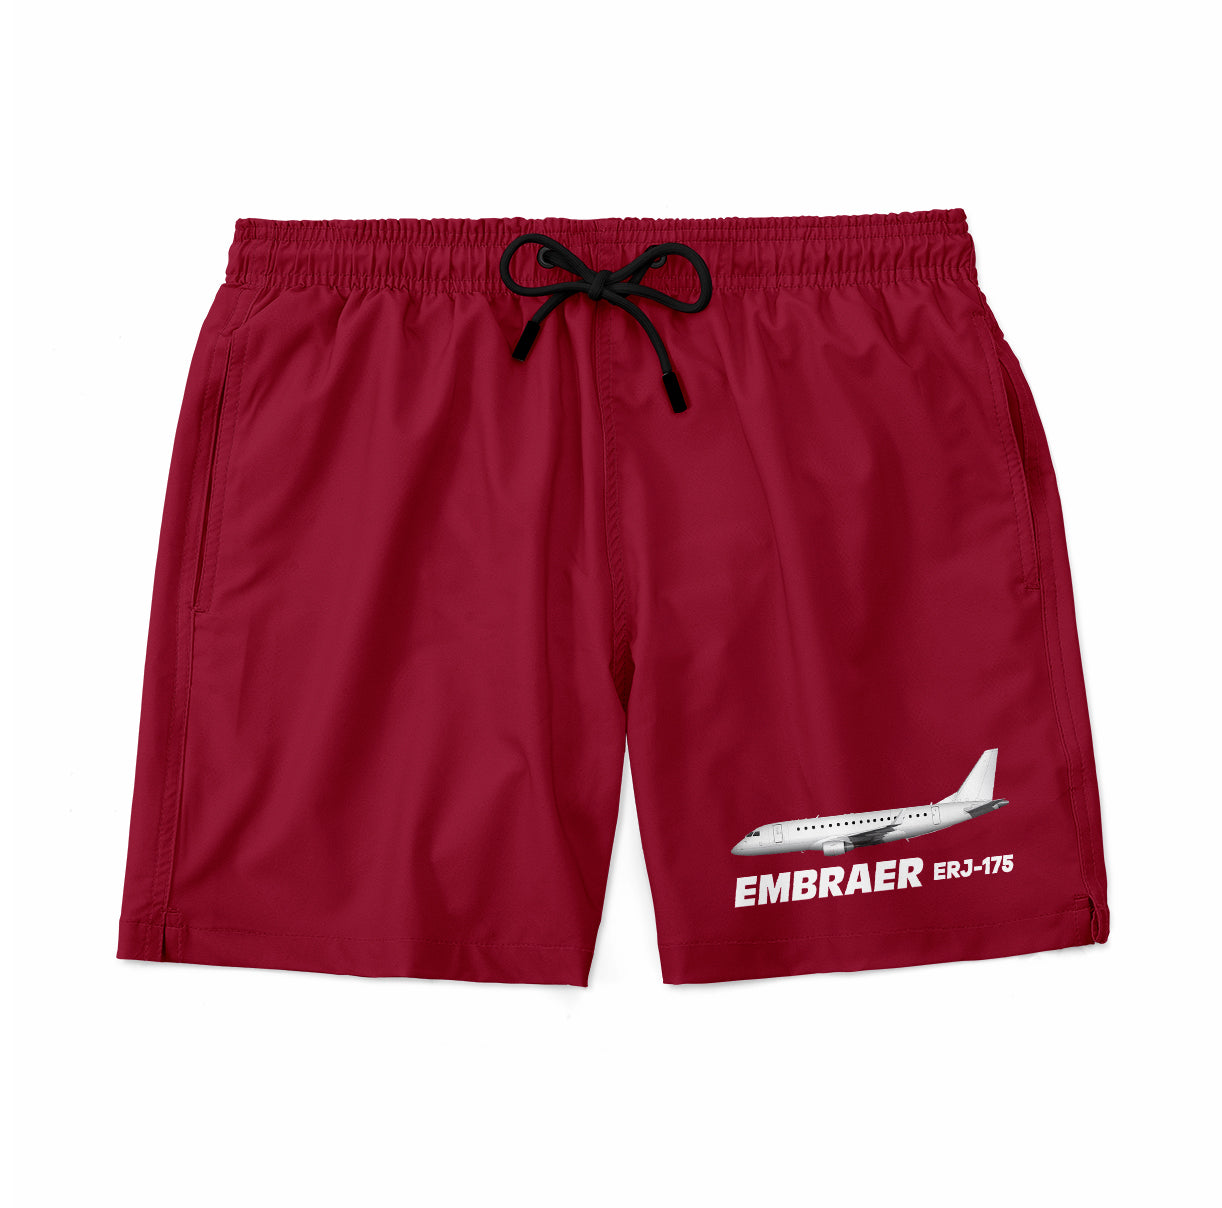 The Embraer ERJ-175 Designed Swim Trunks & Shorts